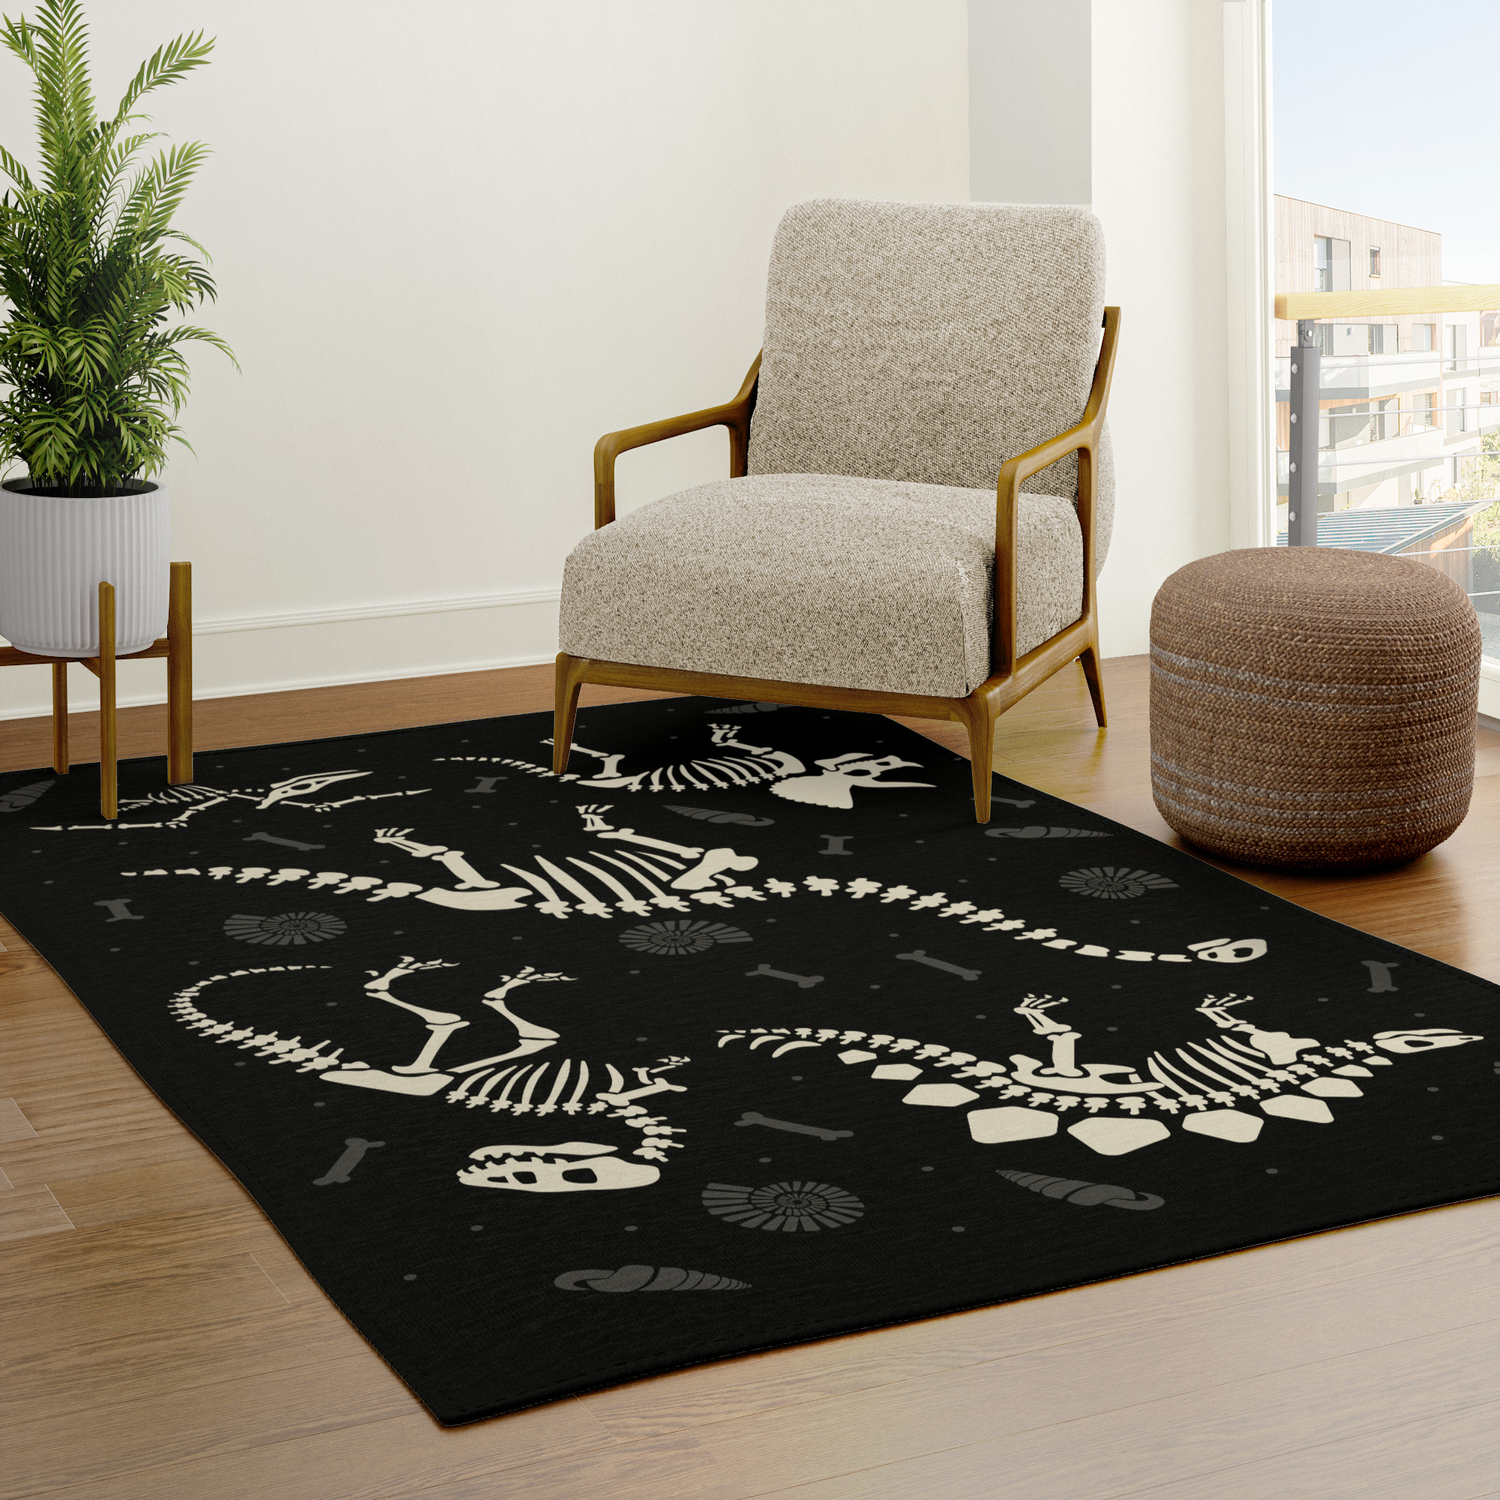 Black Rectangle Flannel Area Rugs Dining Room Floor Rug Dinosaur Fossils Carpet